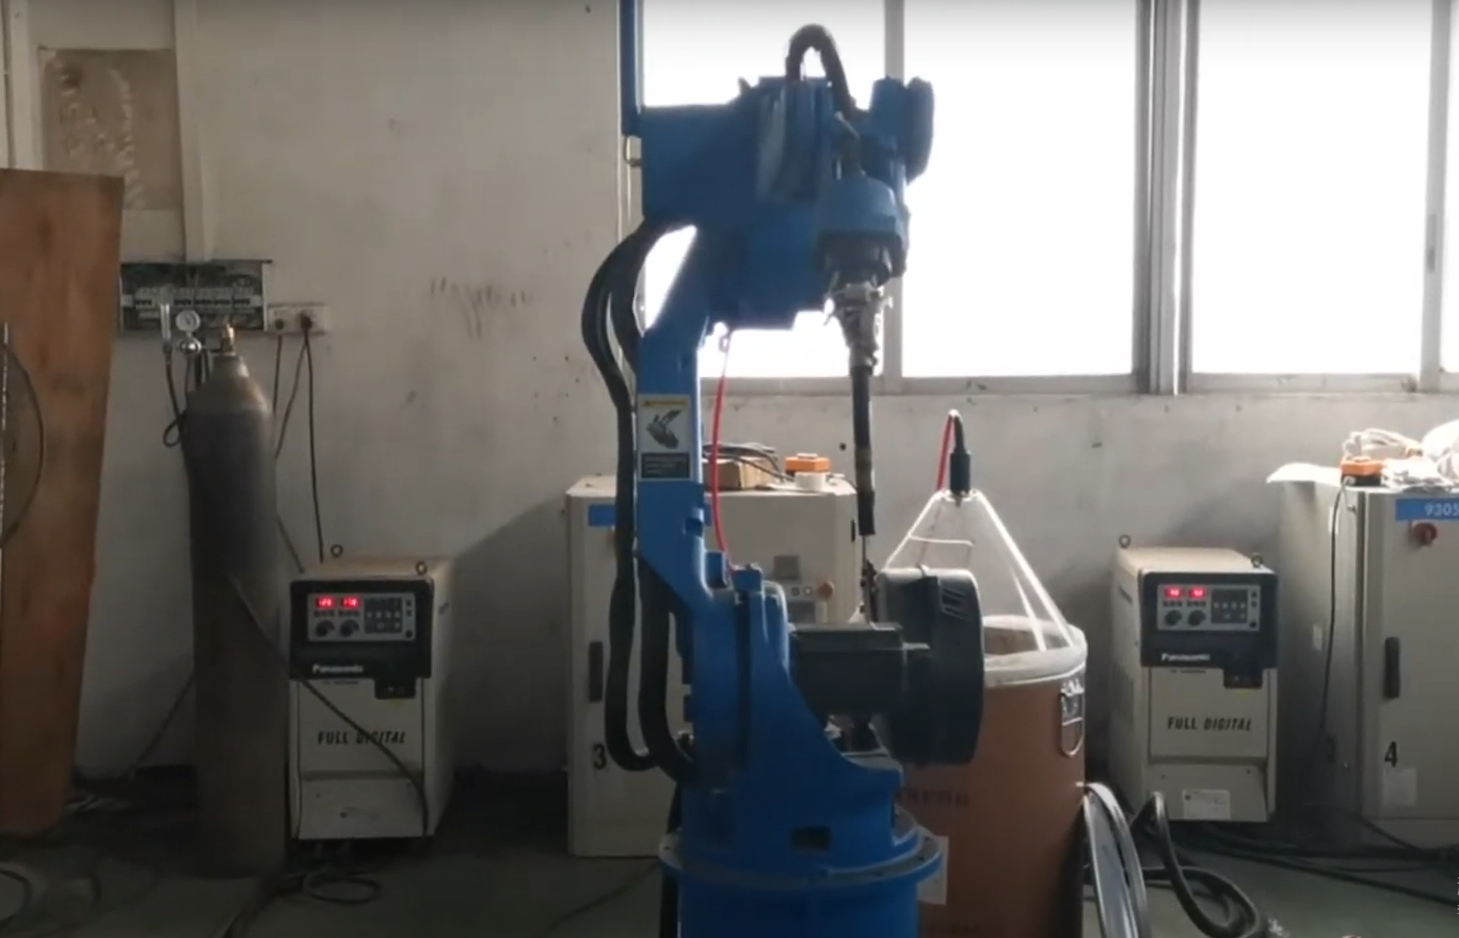 Robot welding for sheet metal fabrication